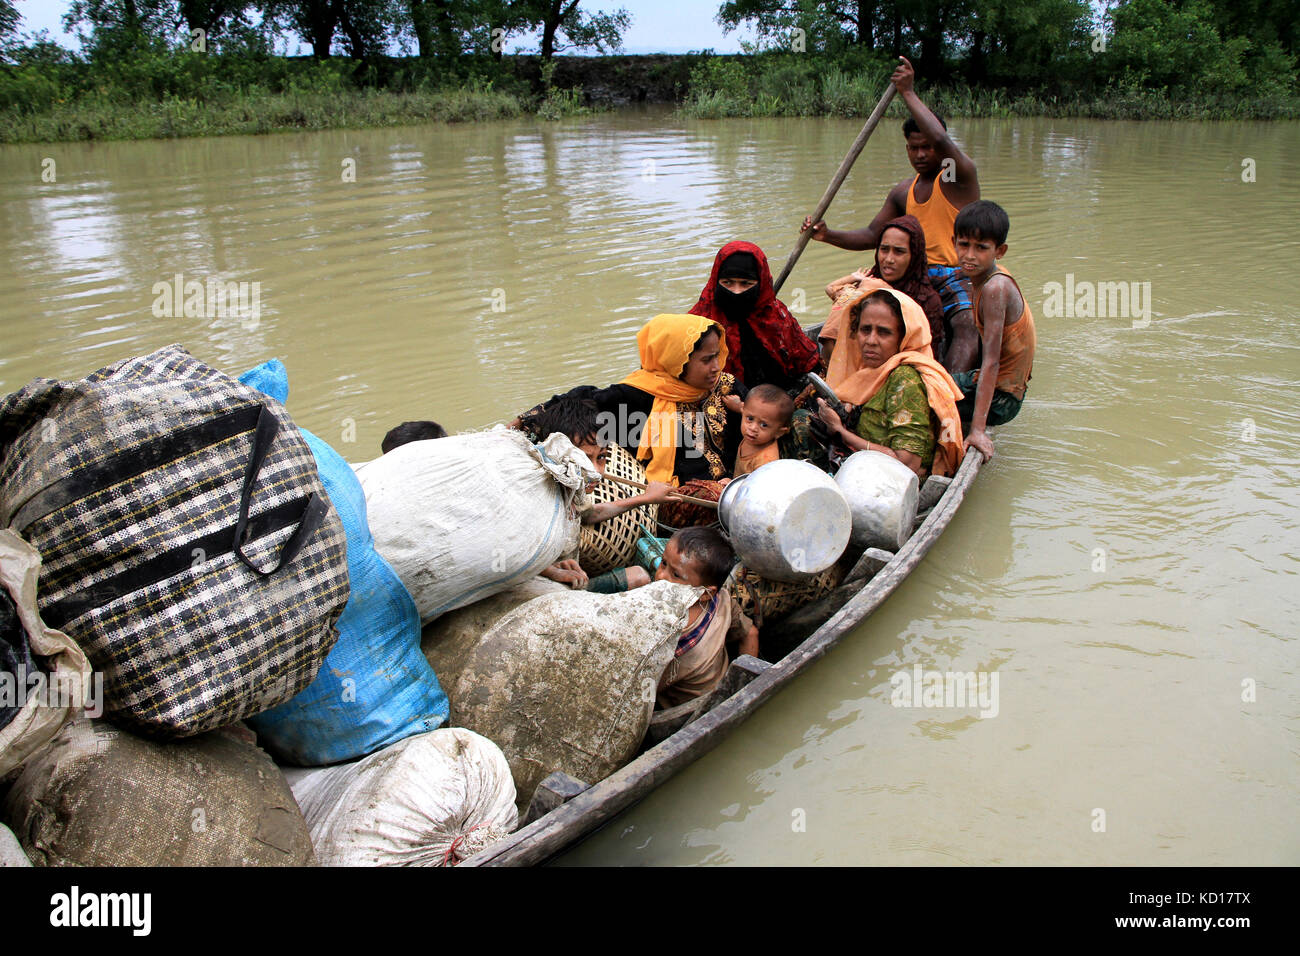 Bangladesh. Rohingya refugees fleeing from Rakhine state entered Bangladesh territory in Cox’s Bazar, Bangladesh. © Rehman Asad/Alamy Stock Photo Stock Photo